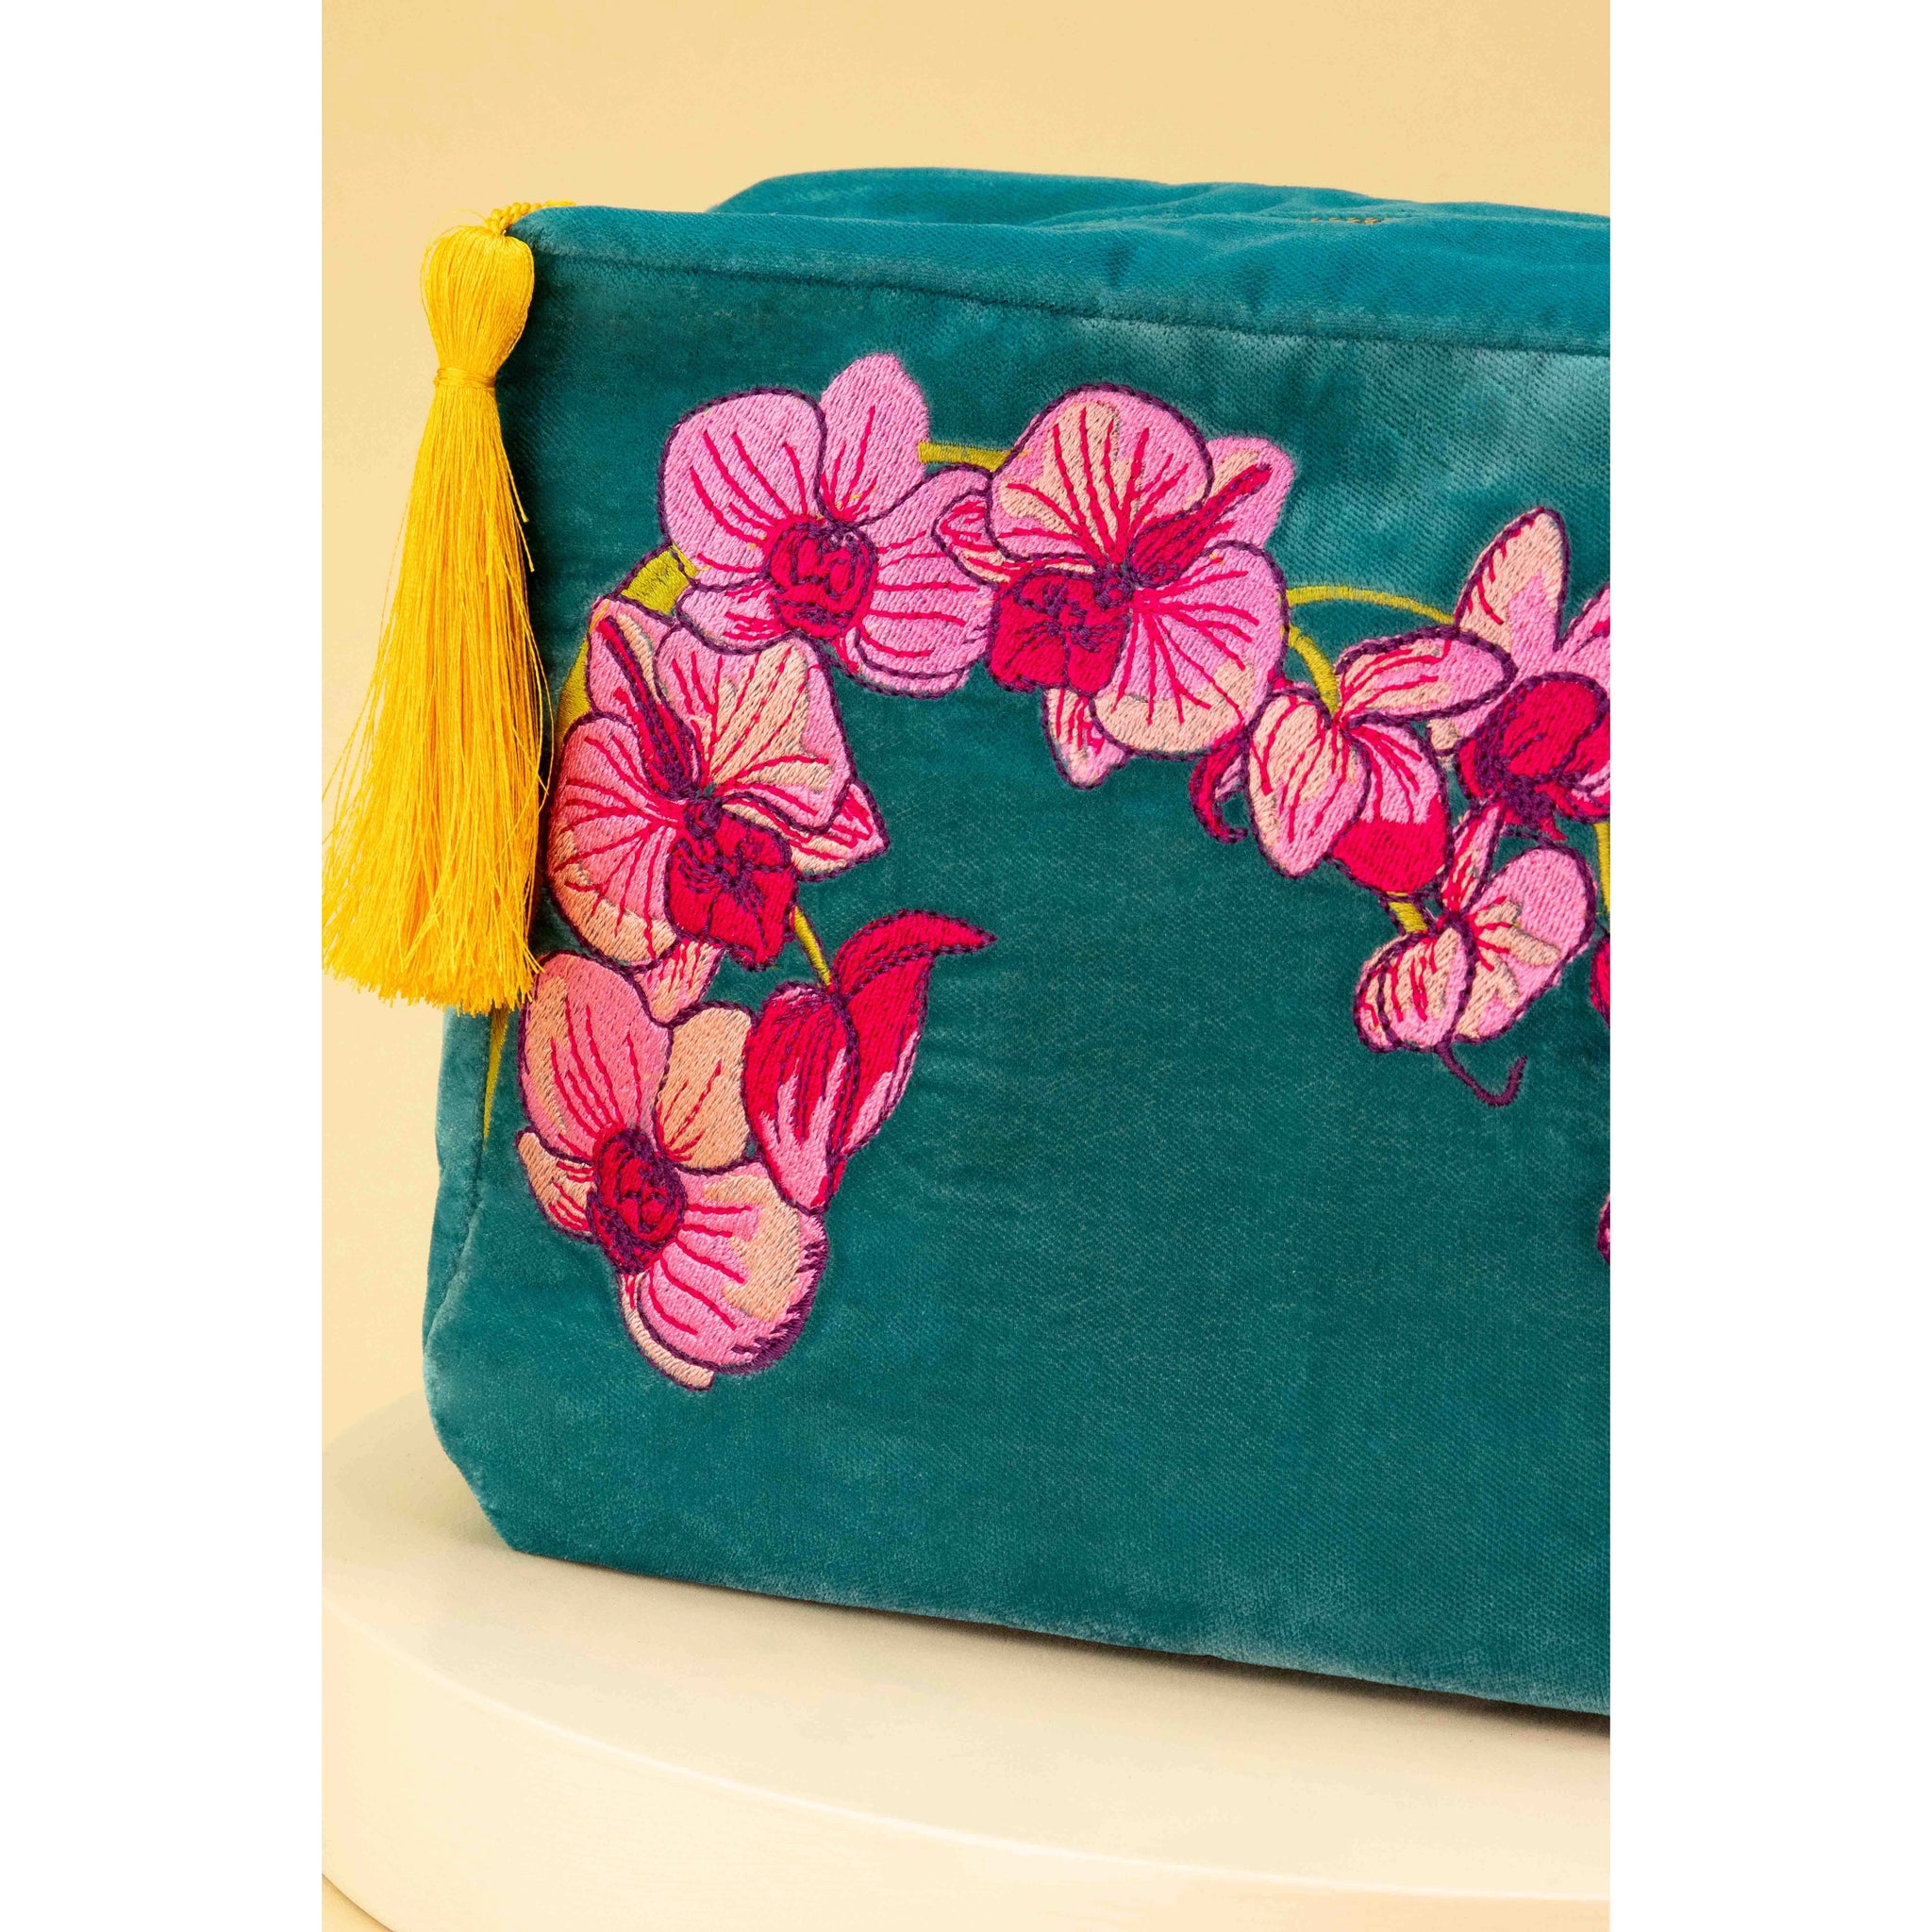 Bloom Top Handle Bag (Velvet Edition)